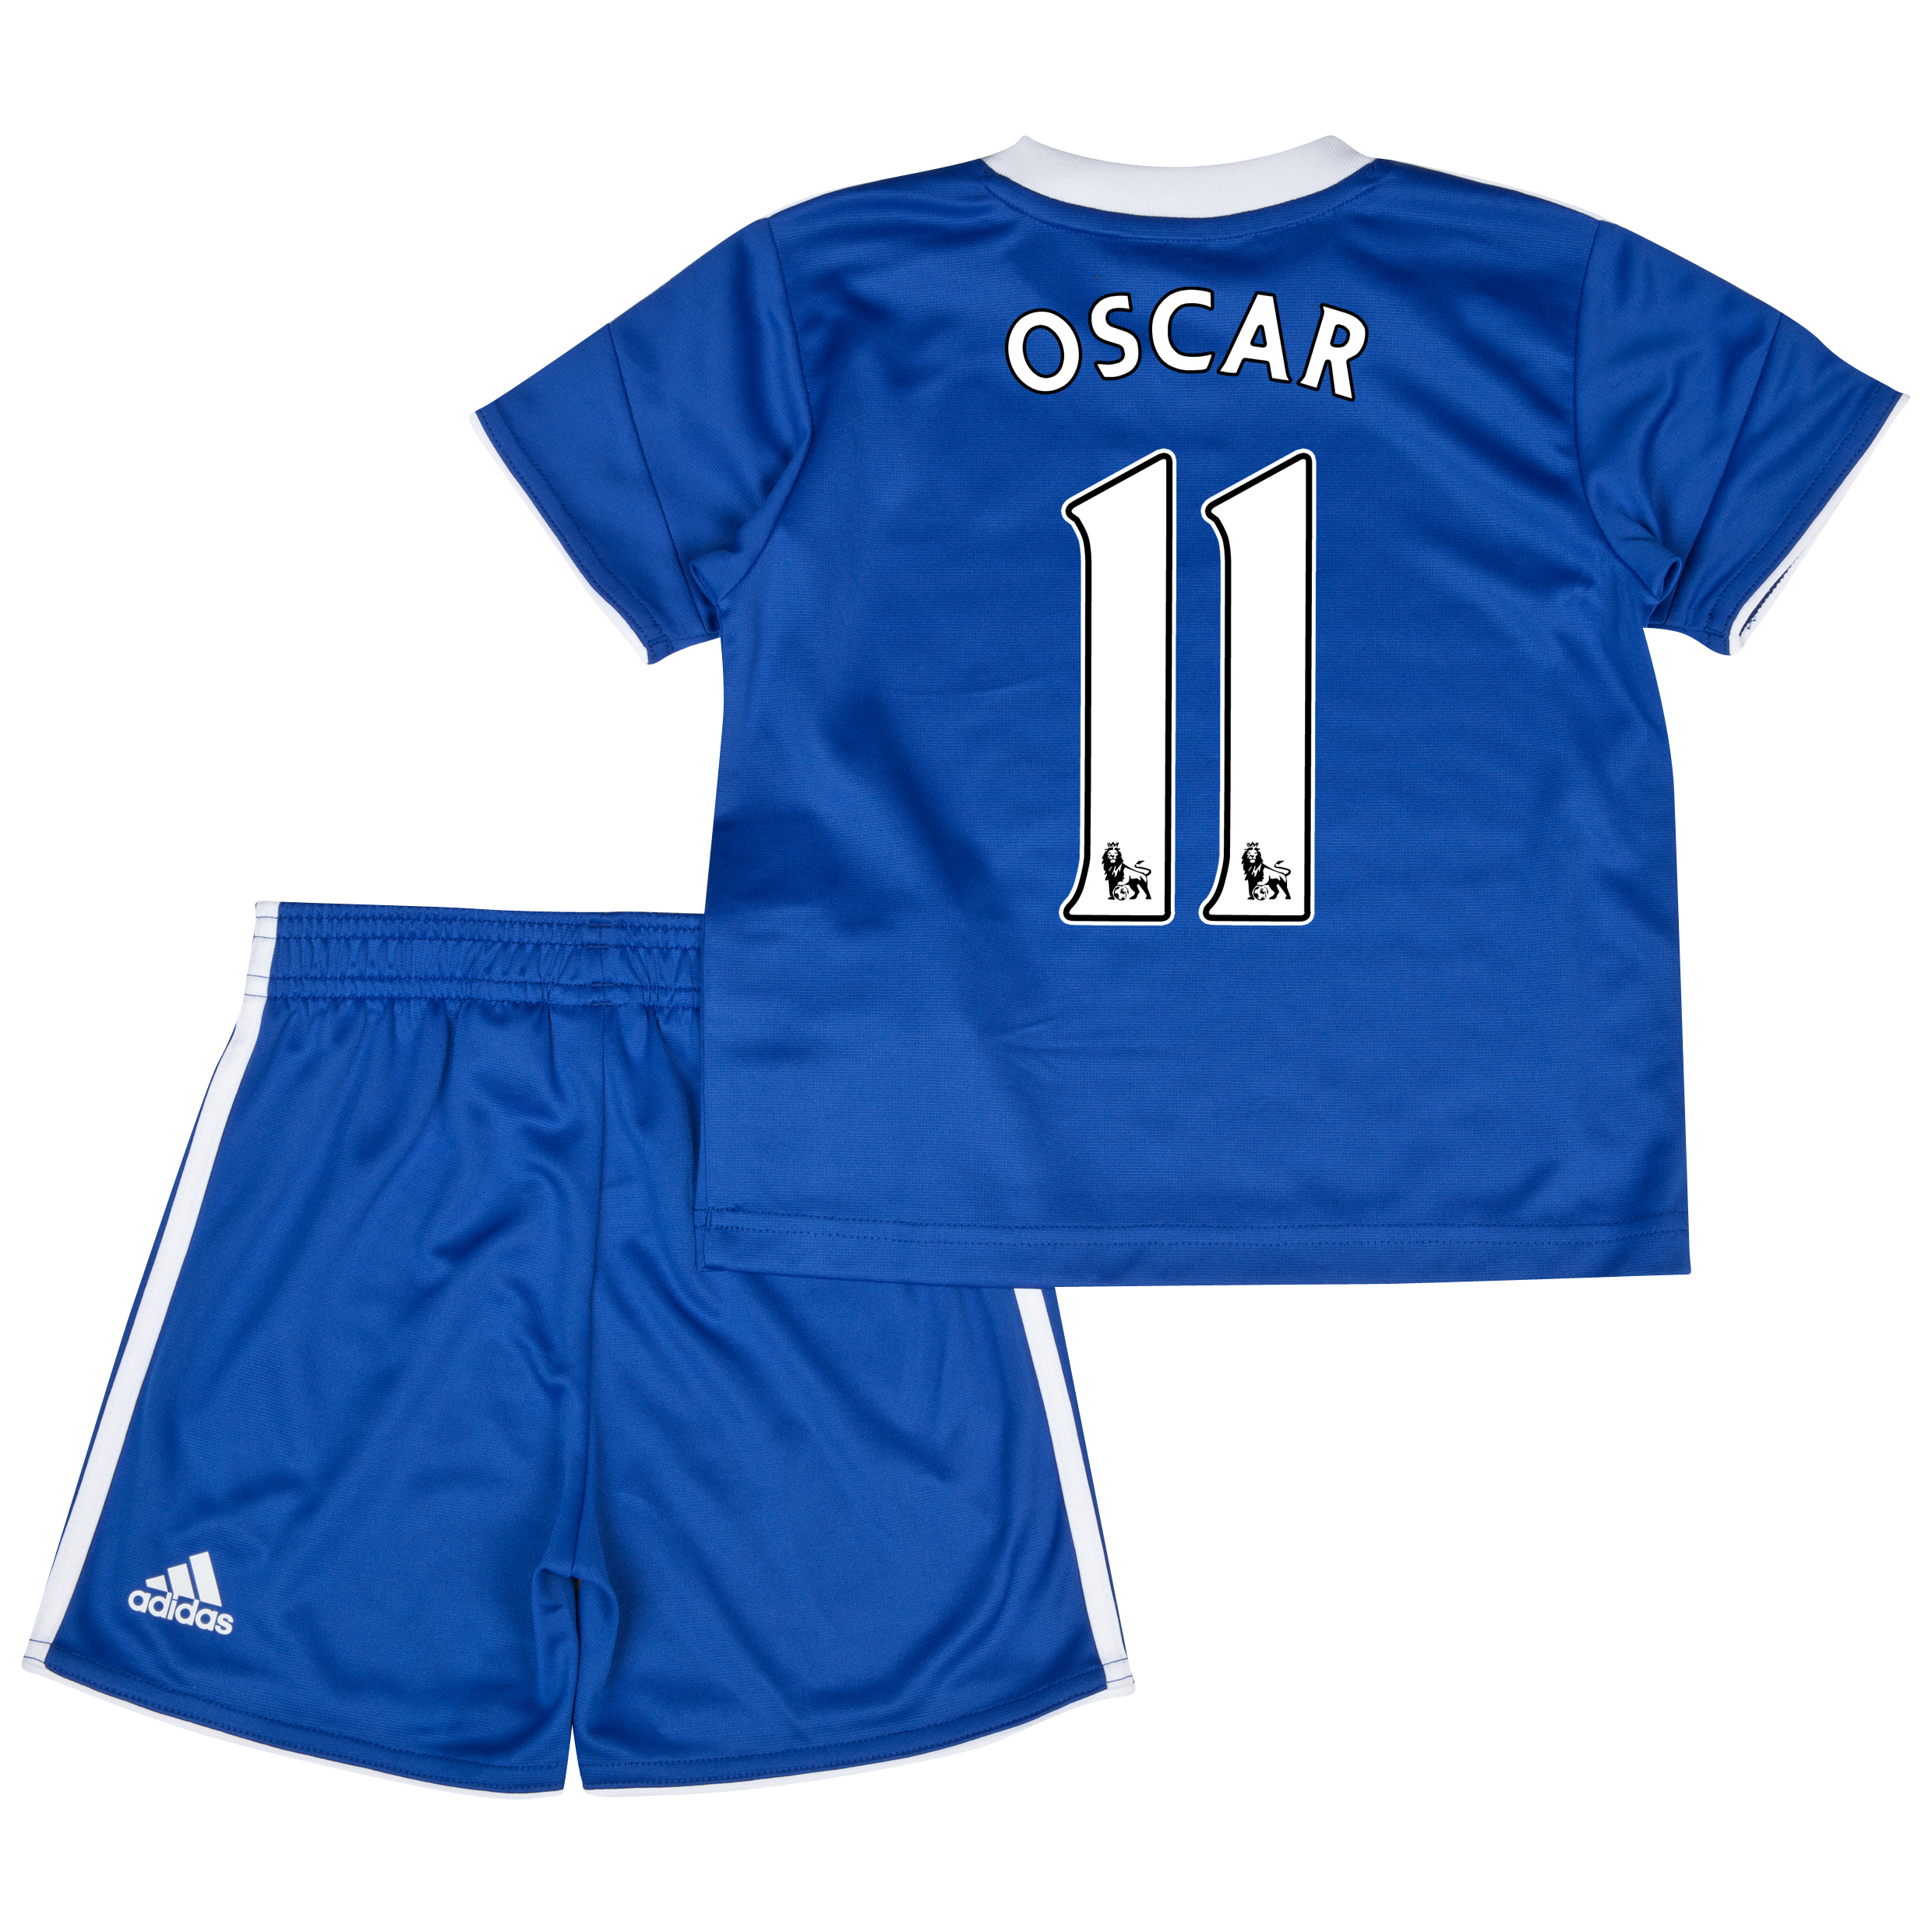 Chelsea Home Mini Kit 2013/14 with Oscar 11 printing